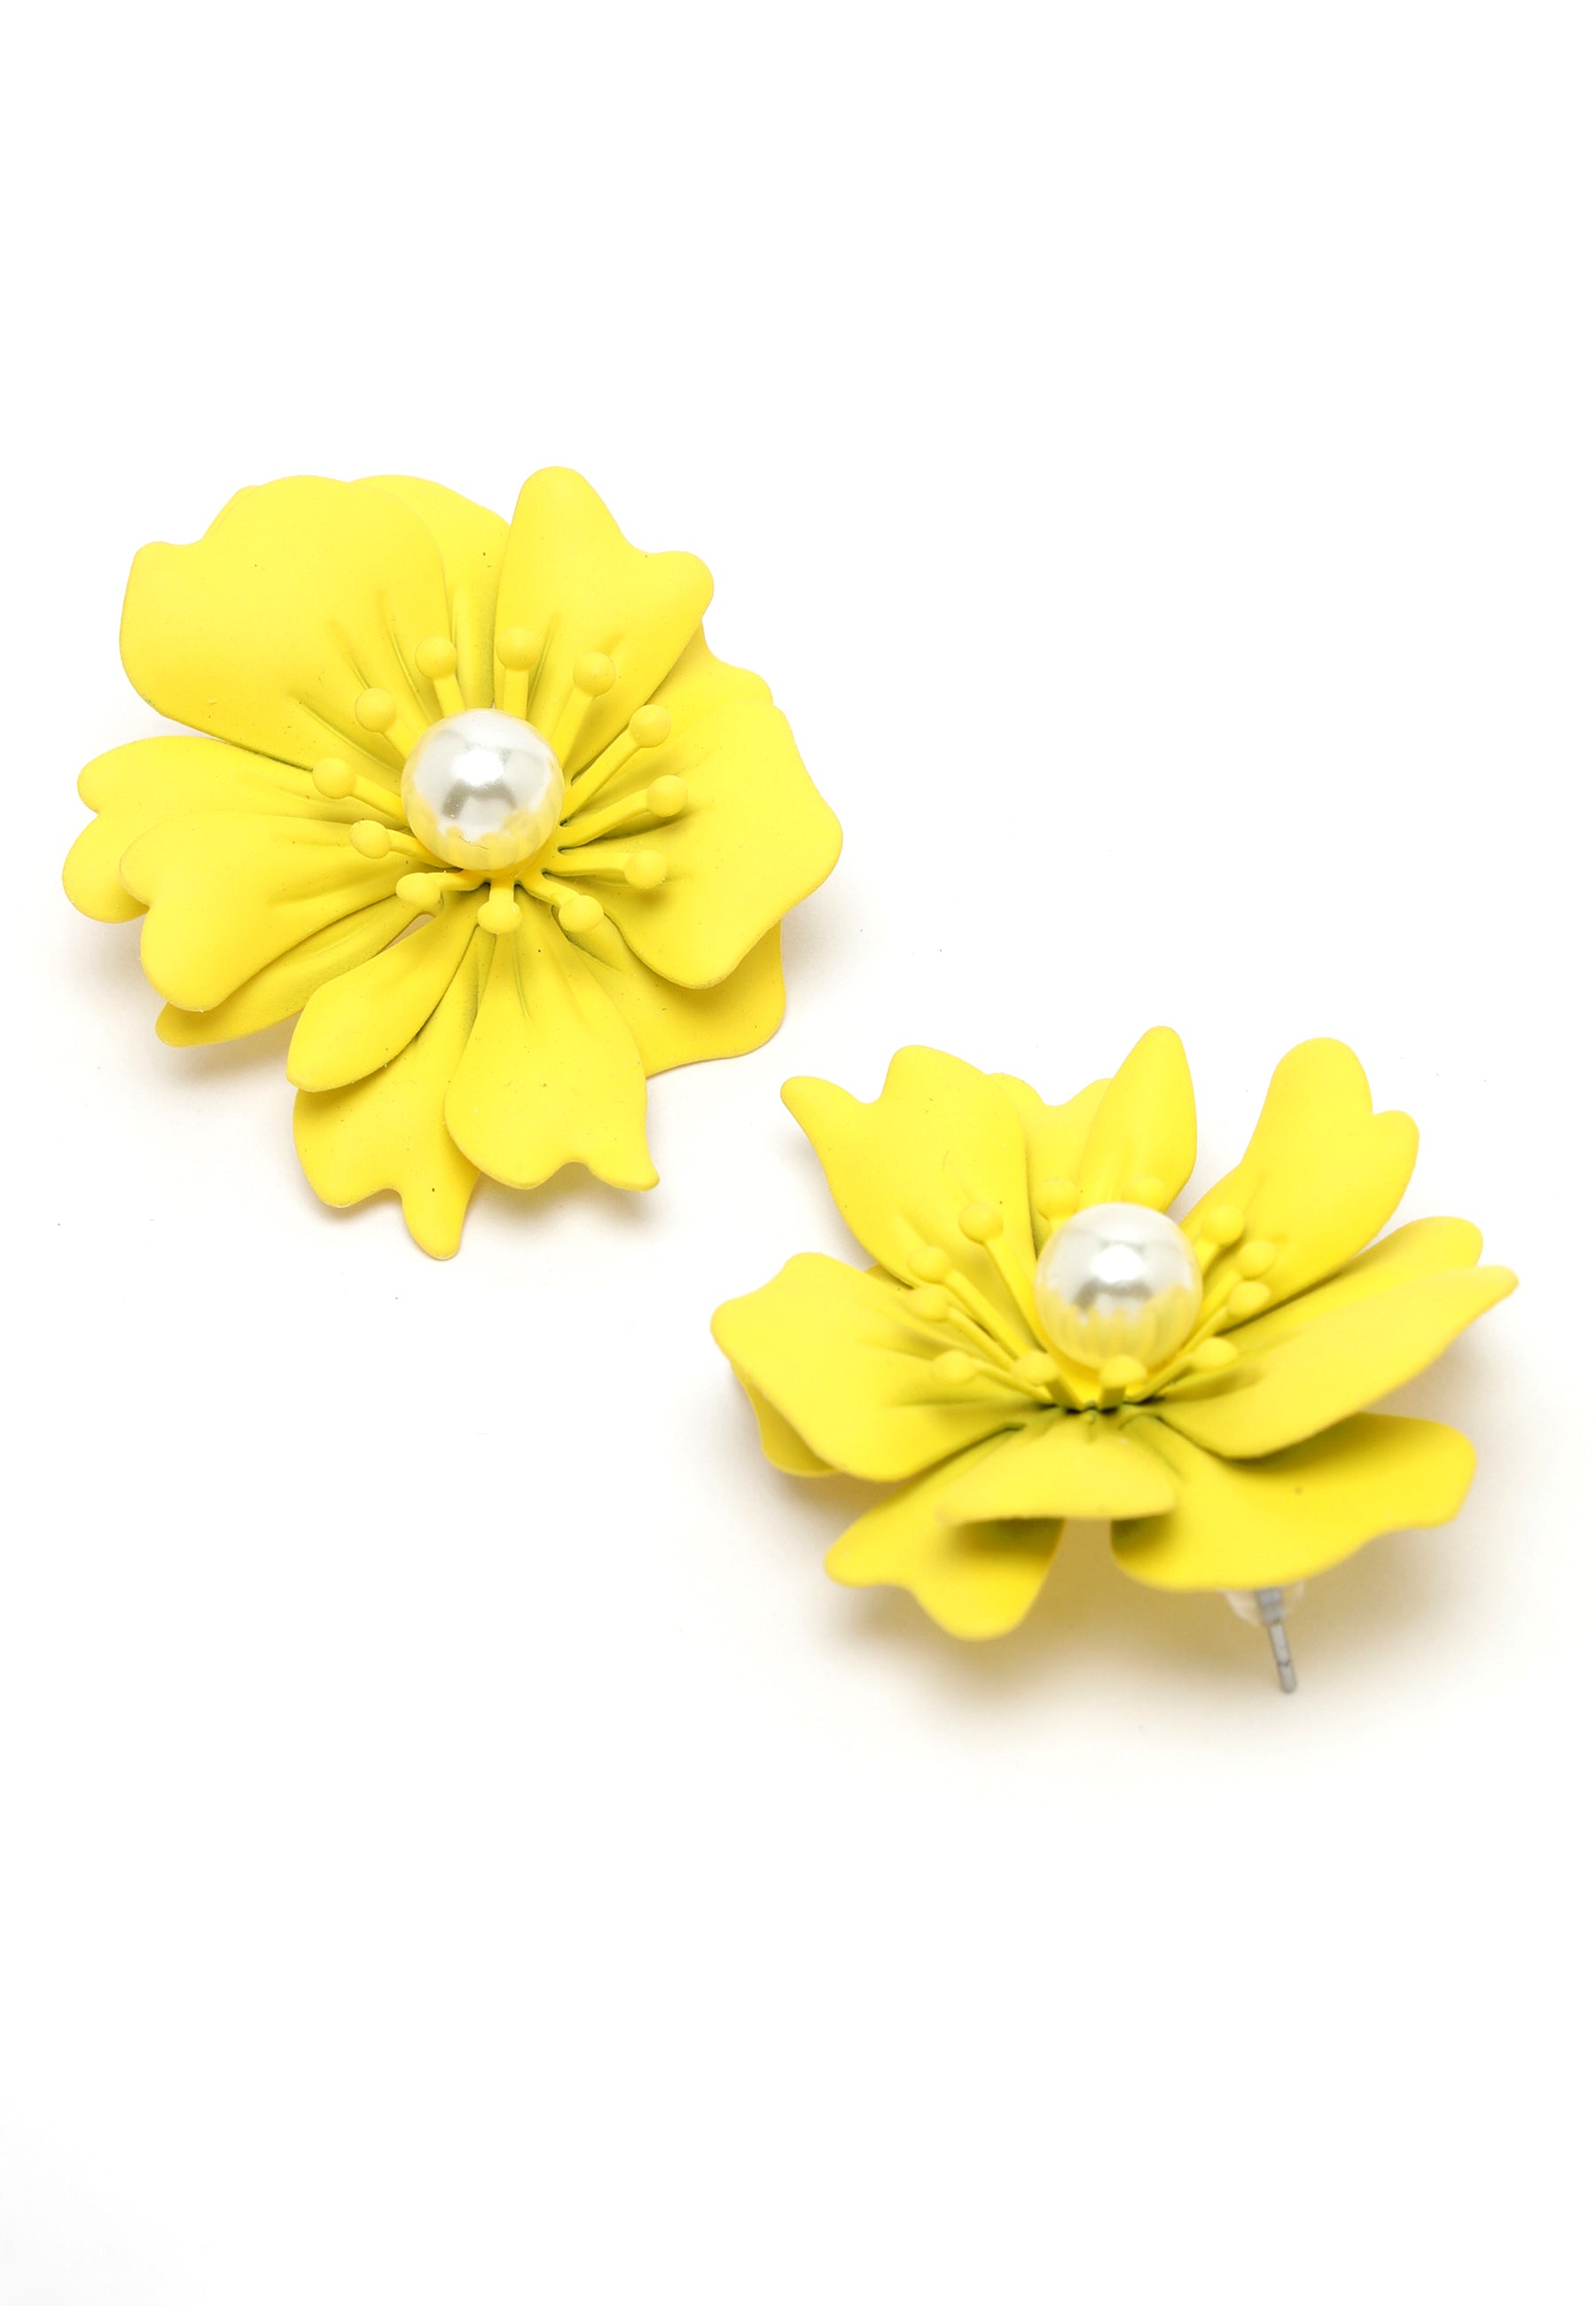 Blumenperlen-Ohrstecker in Gelb